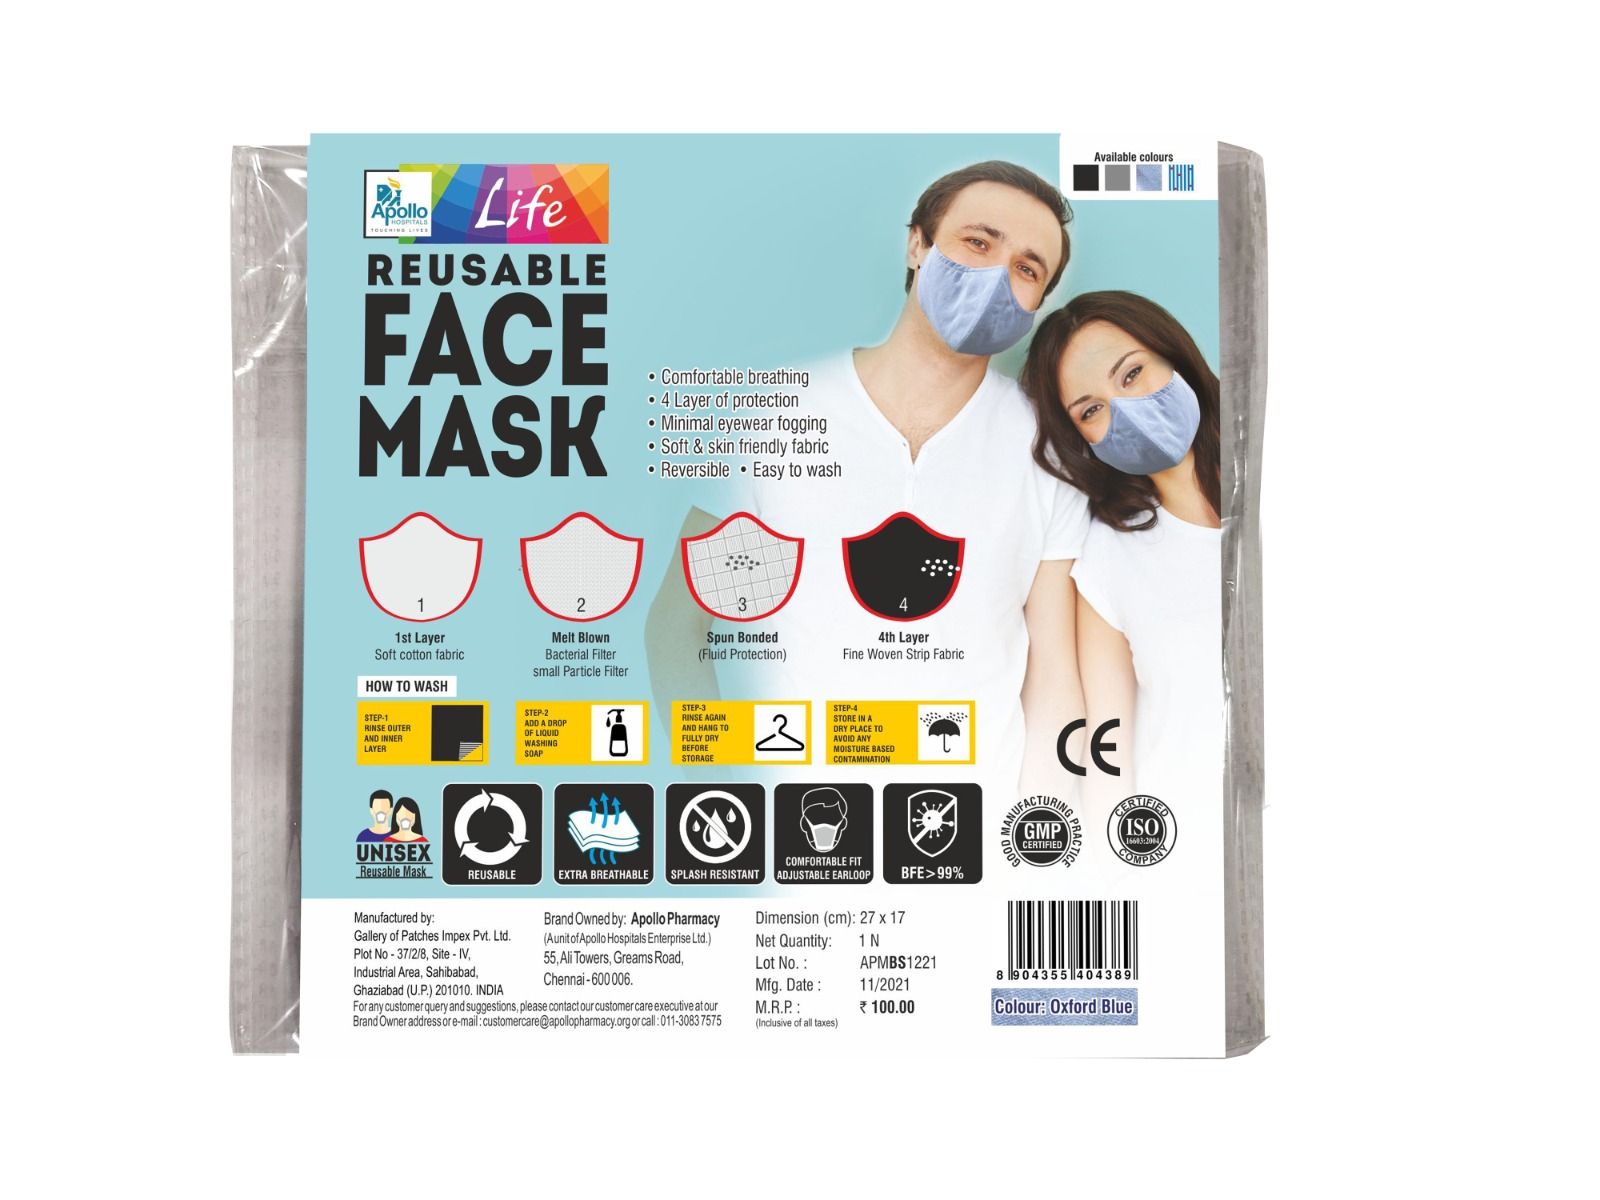 Buy Apollo Life Reusable 4Ply Oxford Blue Face Mask, 2 Count Online